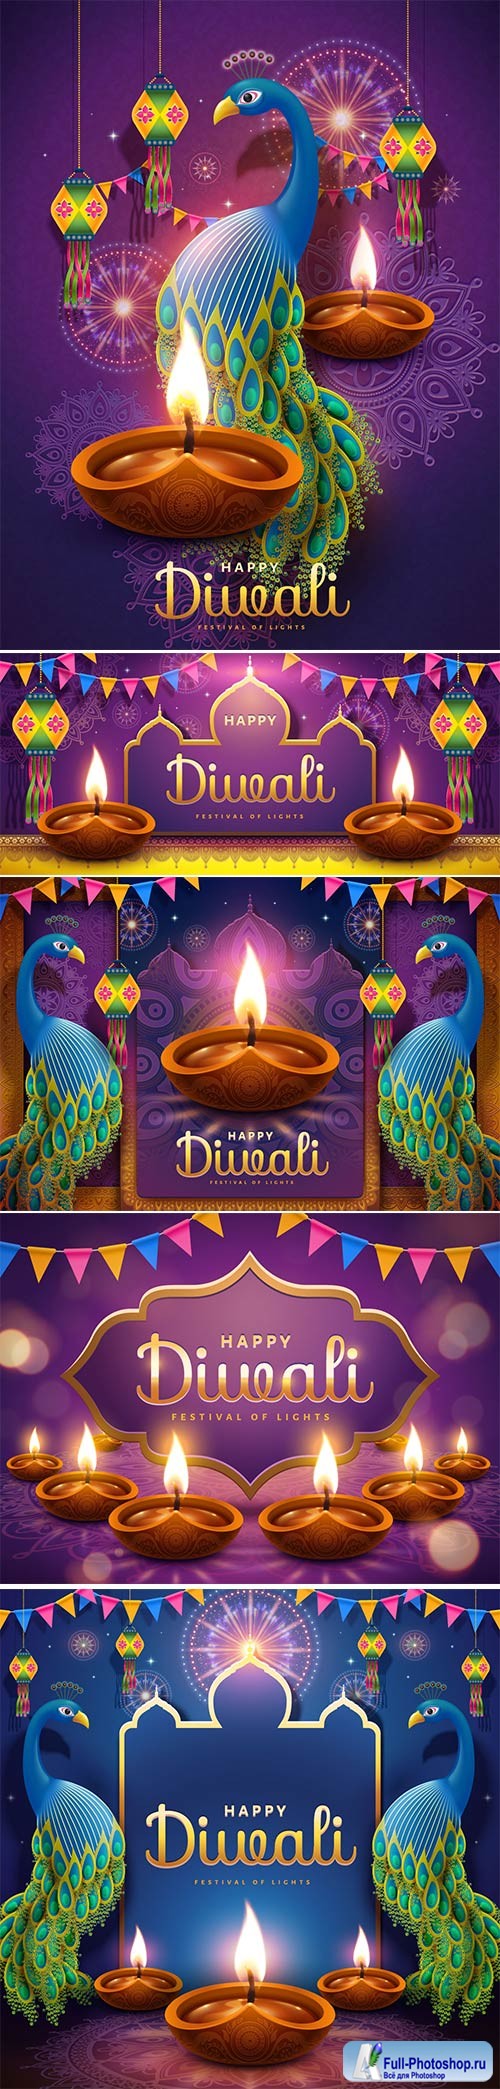 Happy Diwali festival vector illustration